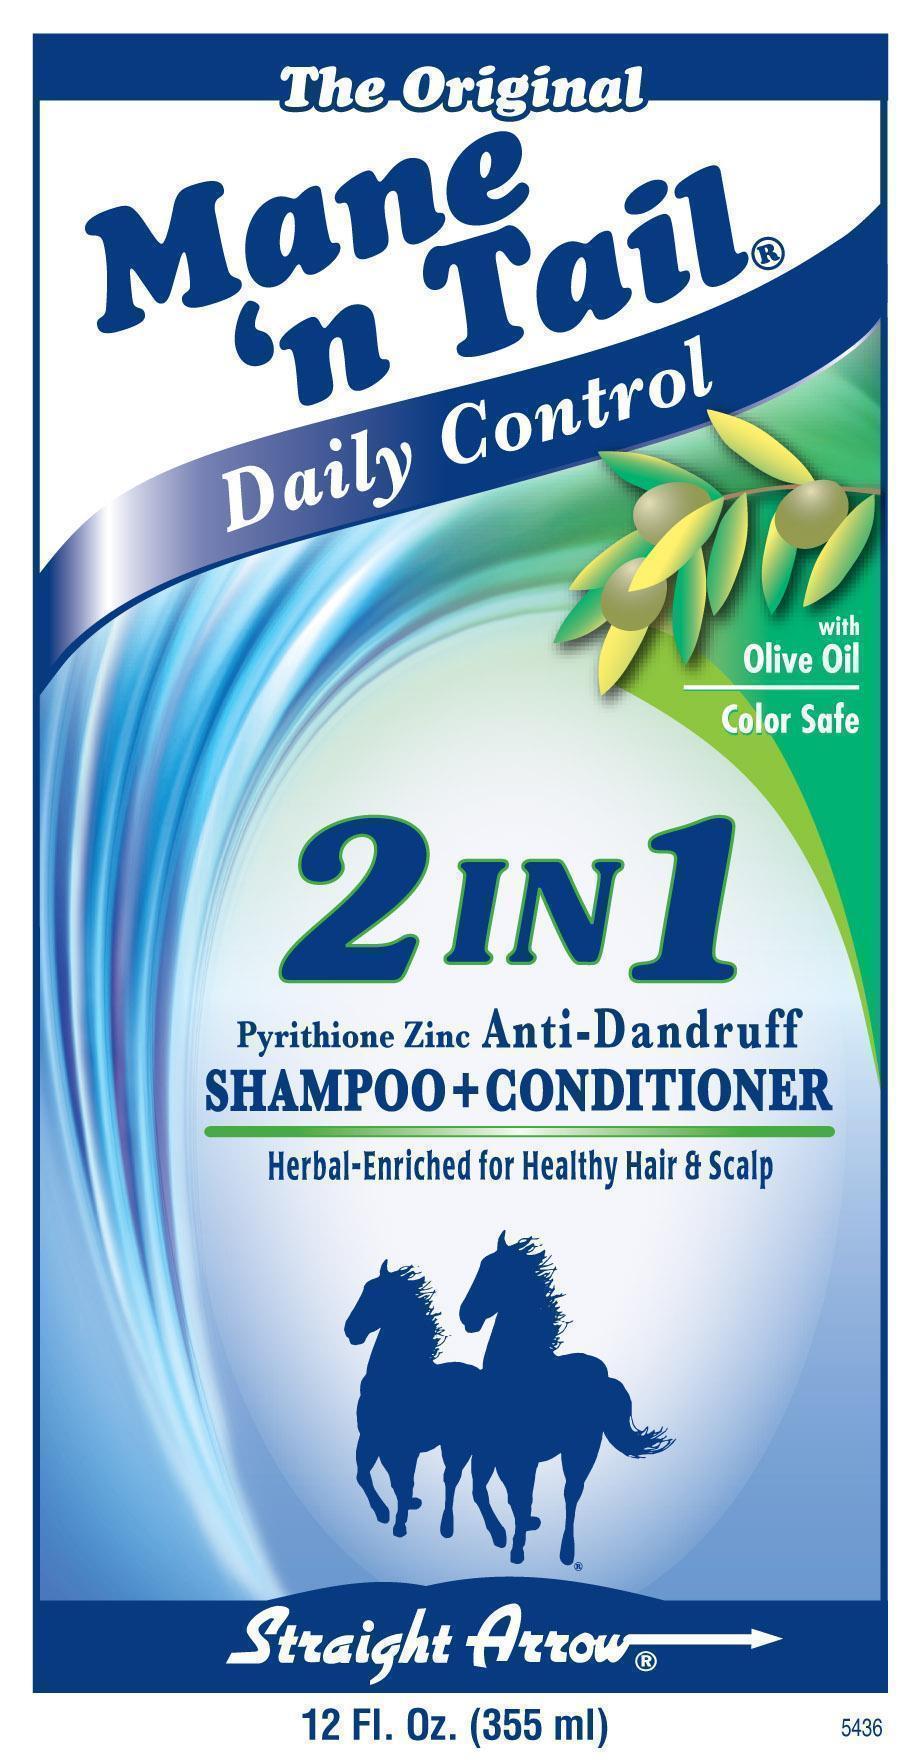 the original mane n tail daily control 2 in 1 anti dandruff back label